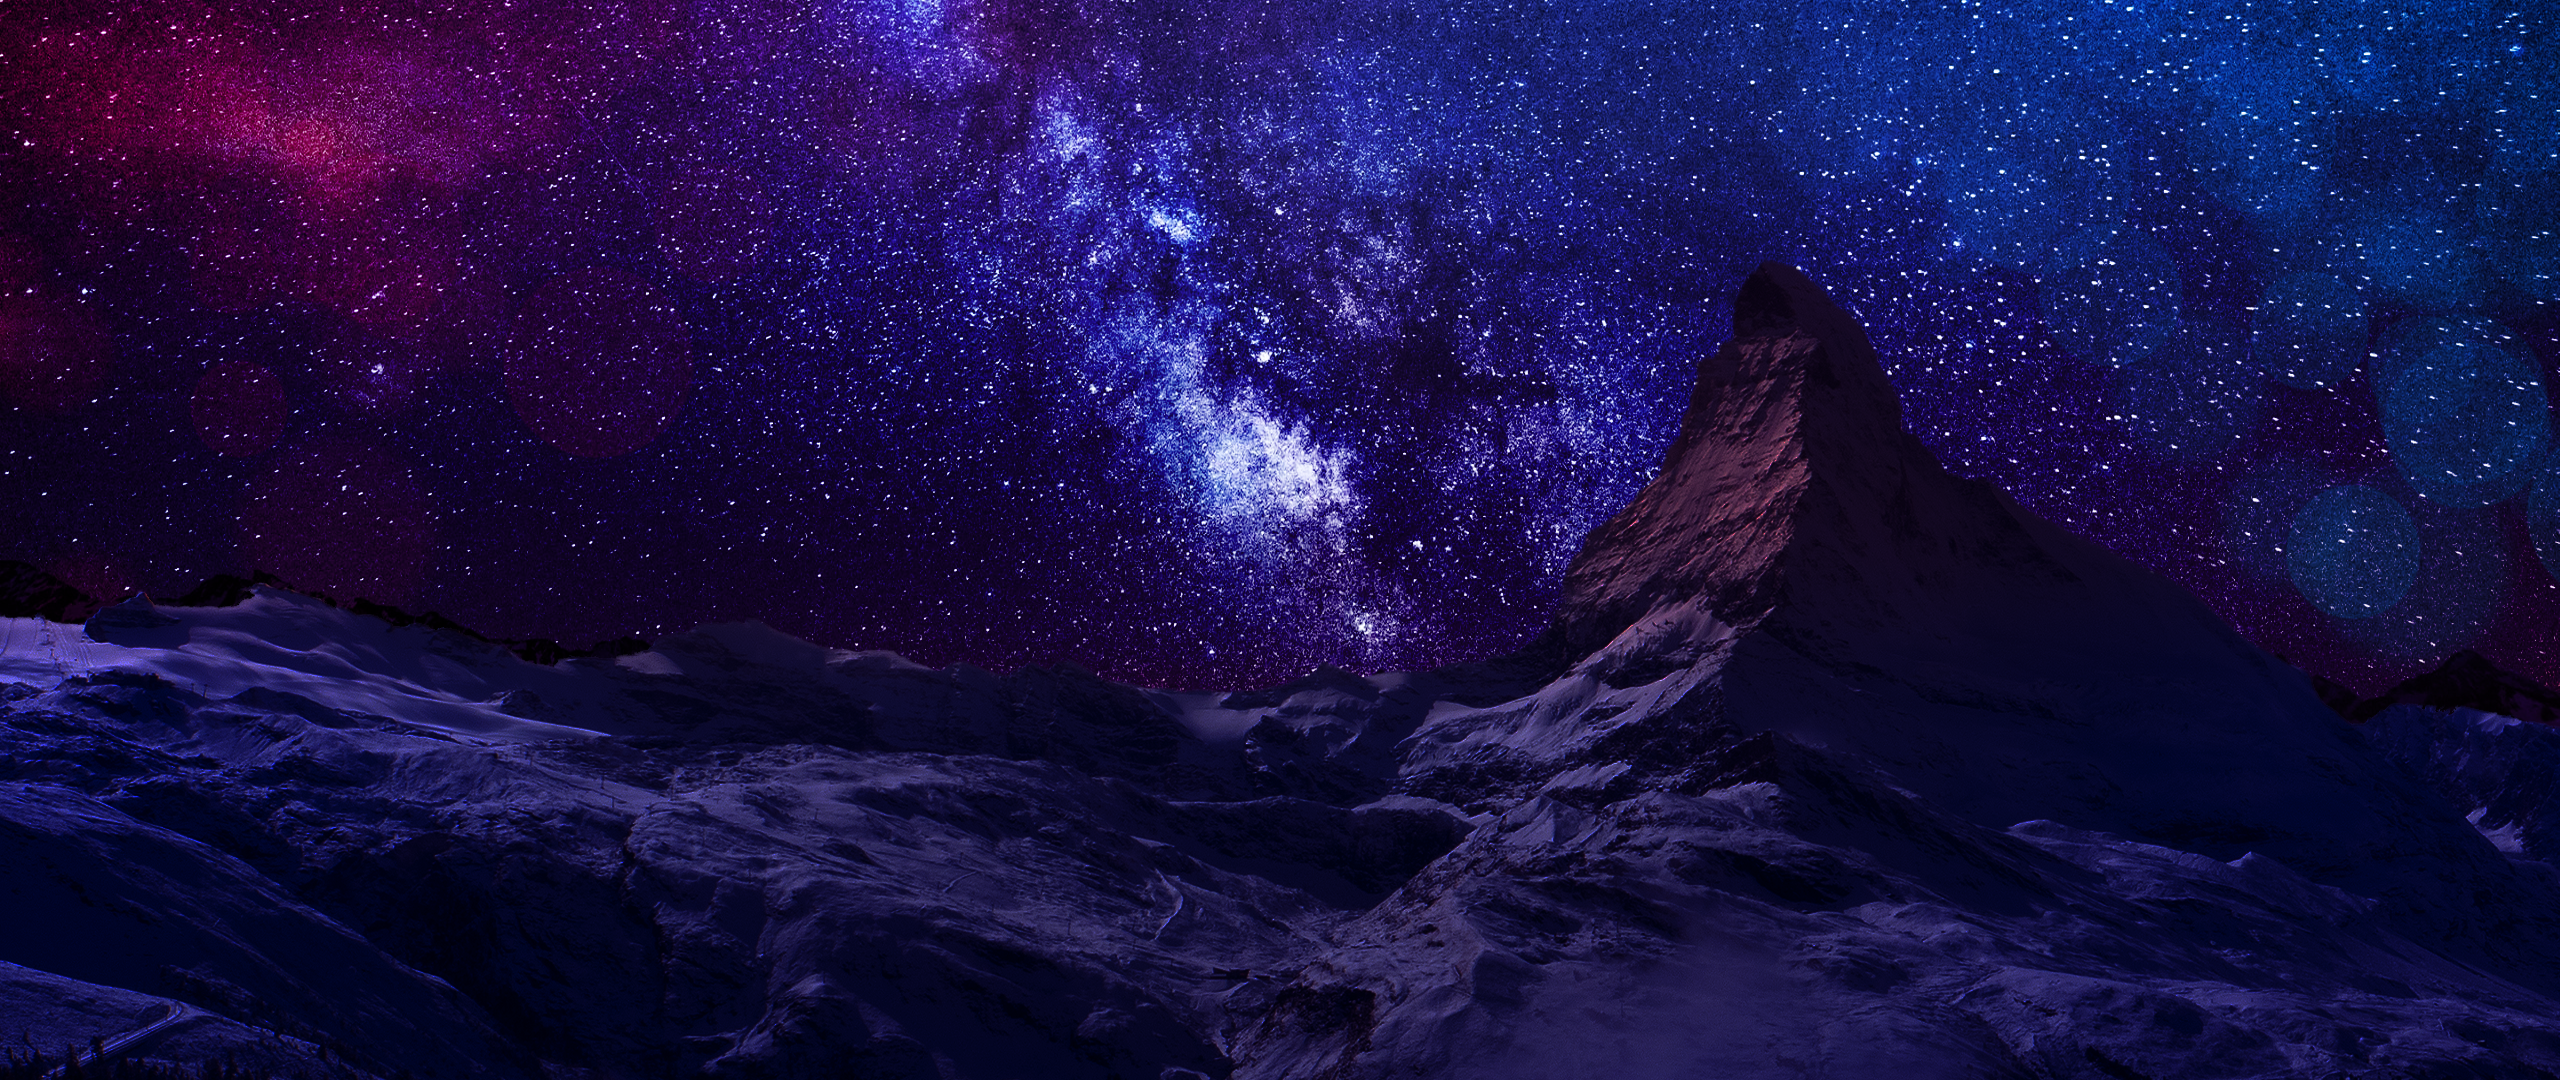 2560 X 1080 Wallpaper - Anime Night Sky Background - HD Wallpaper 